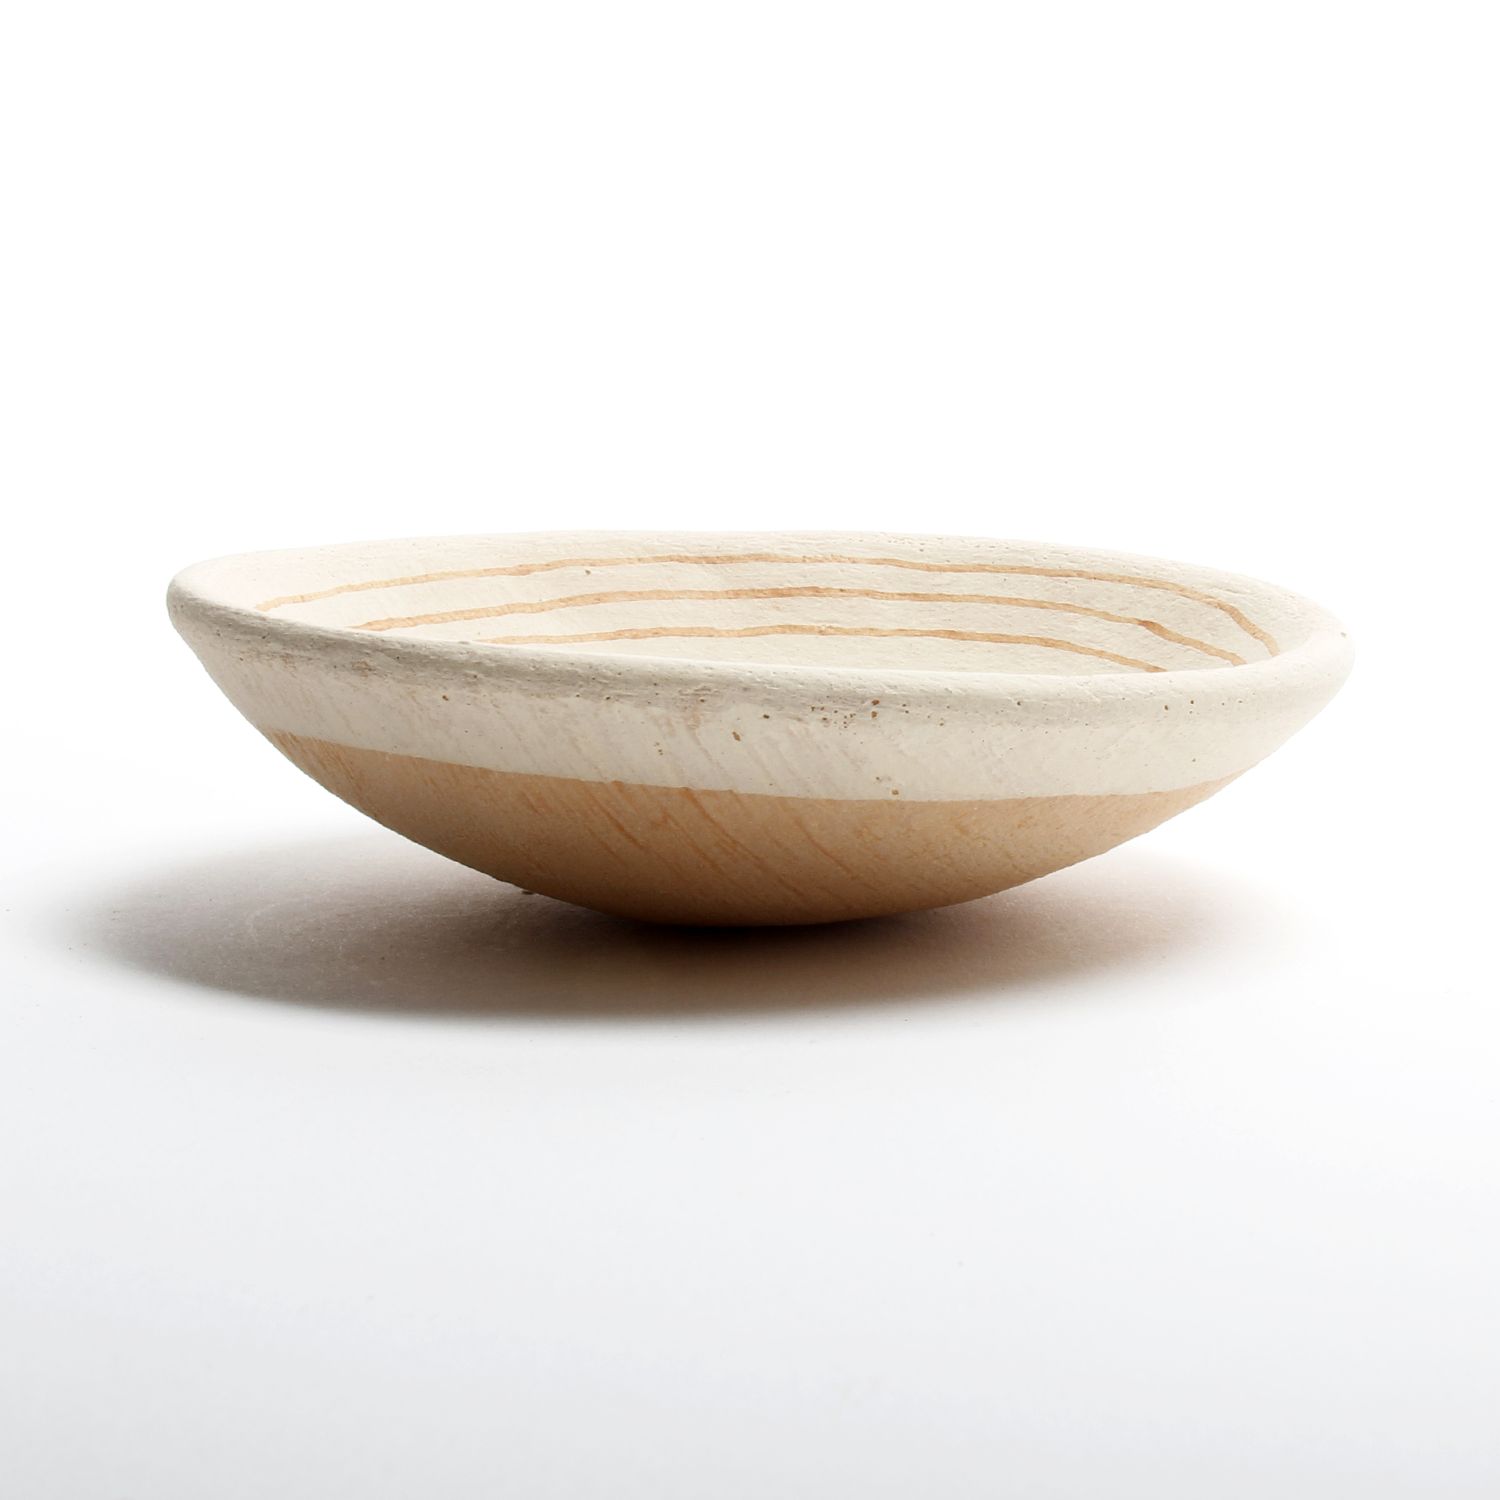 David Migwans: Shawman Family Bowl Product Image 2 of 3